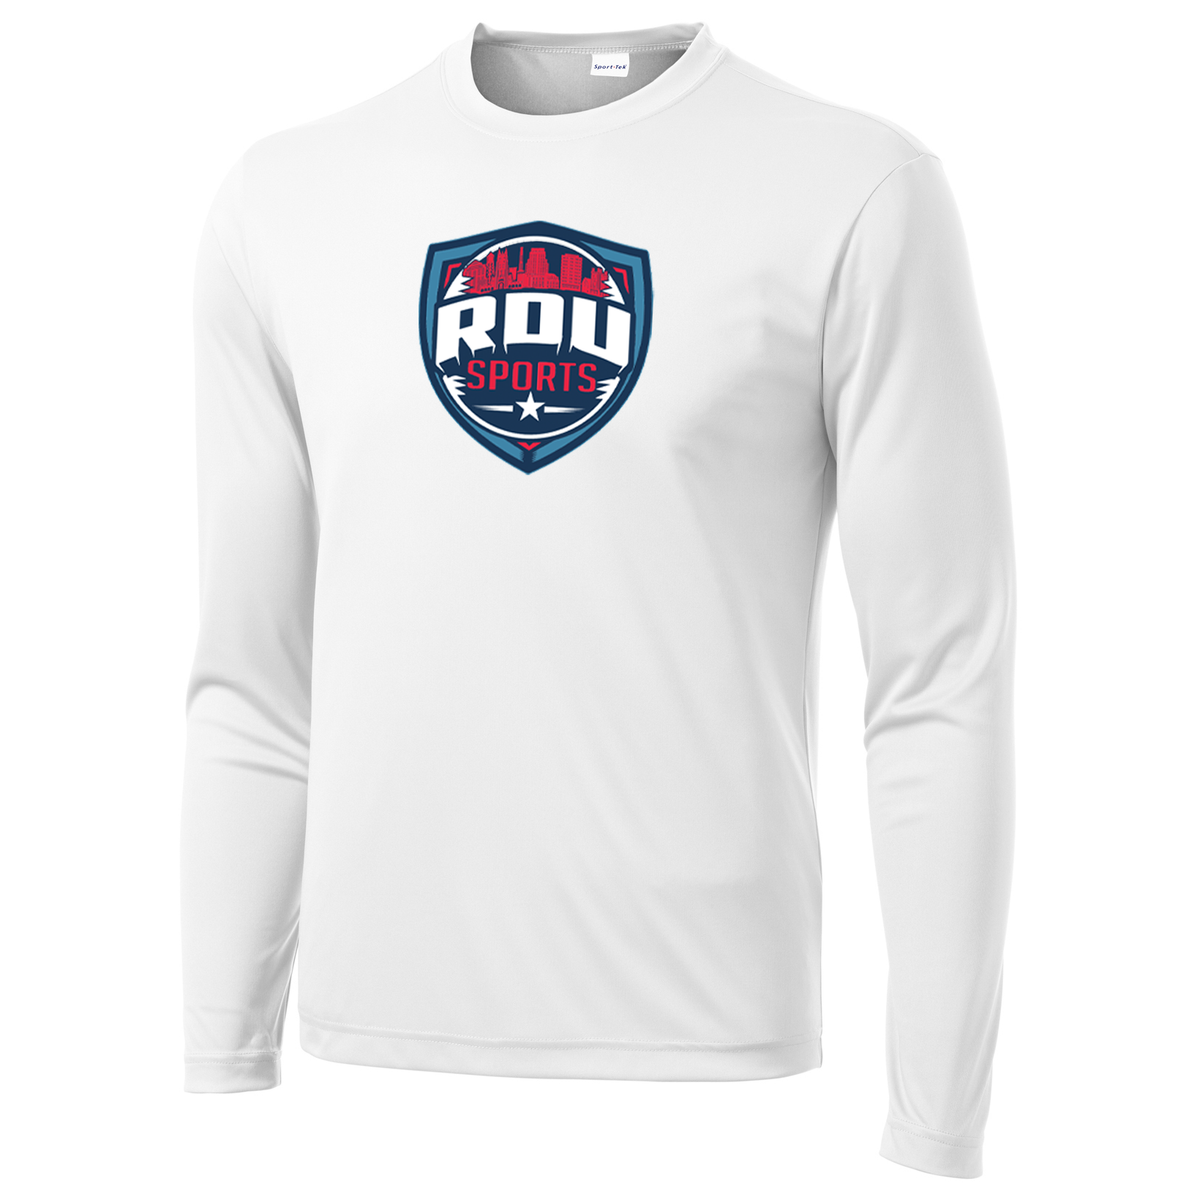 RDU Sports Long Sleeve Performance Shirt